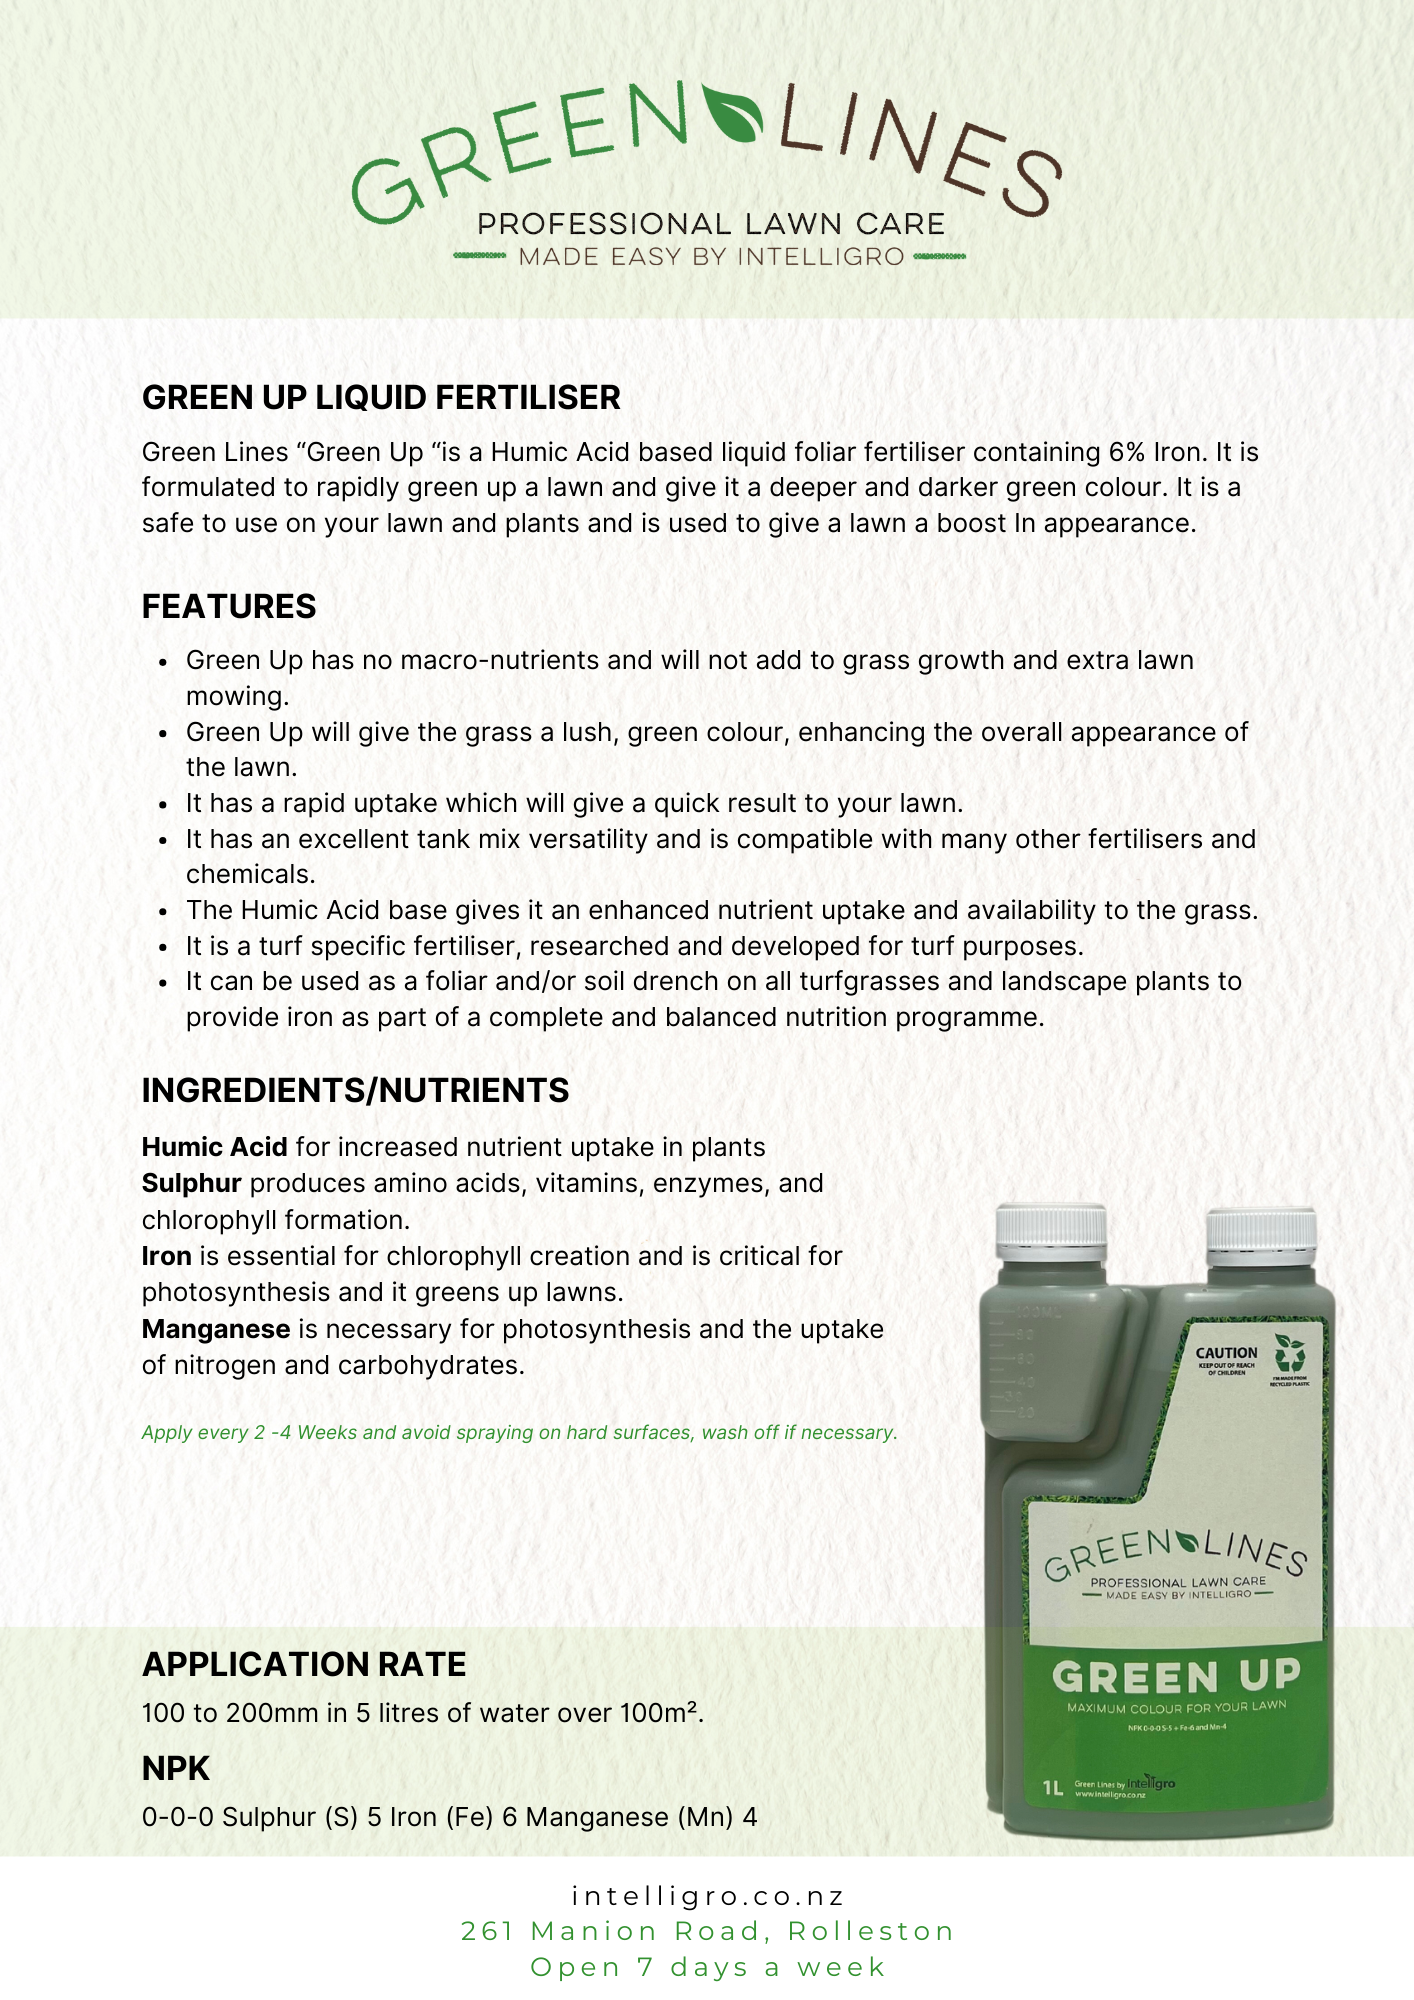 Green Up is a Humic Acid based liquid foliar lawn fertiliser containing 6% Iron